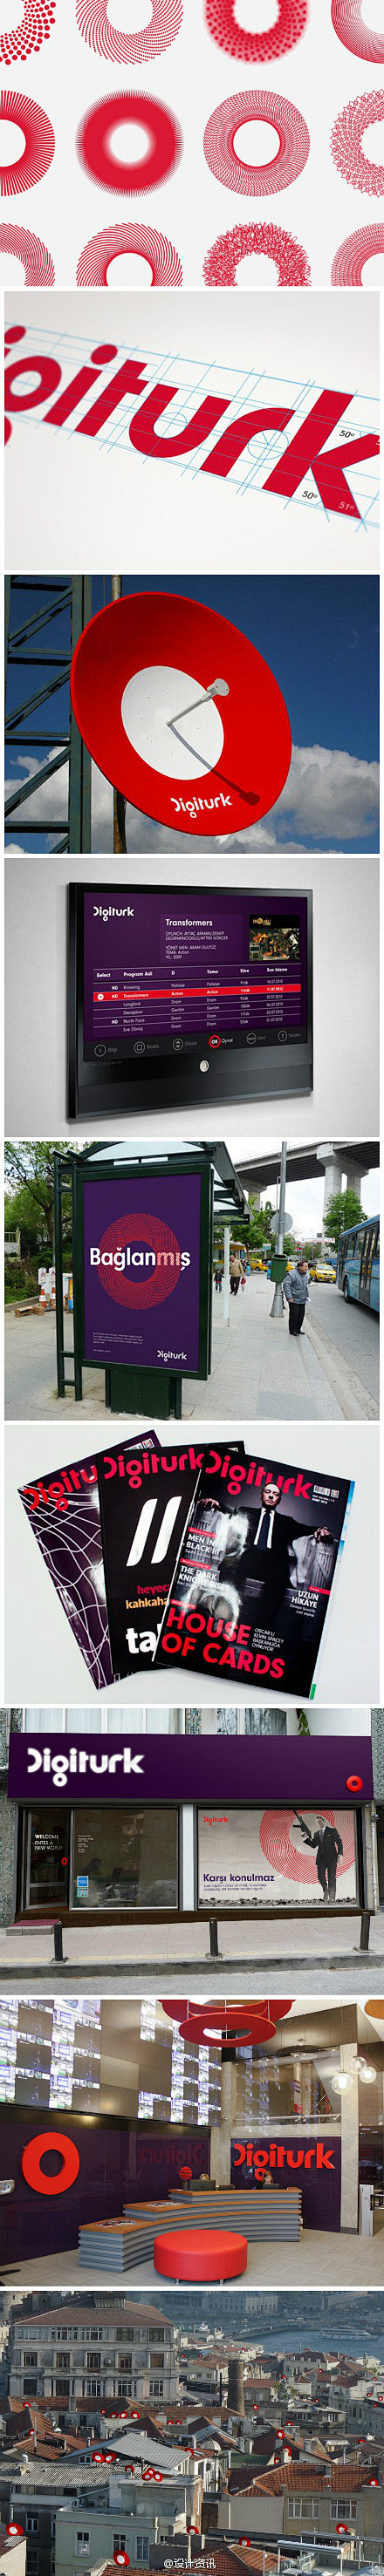 Digiturk土耳其第一个付费电视品牌...